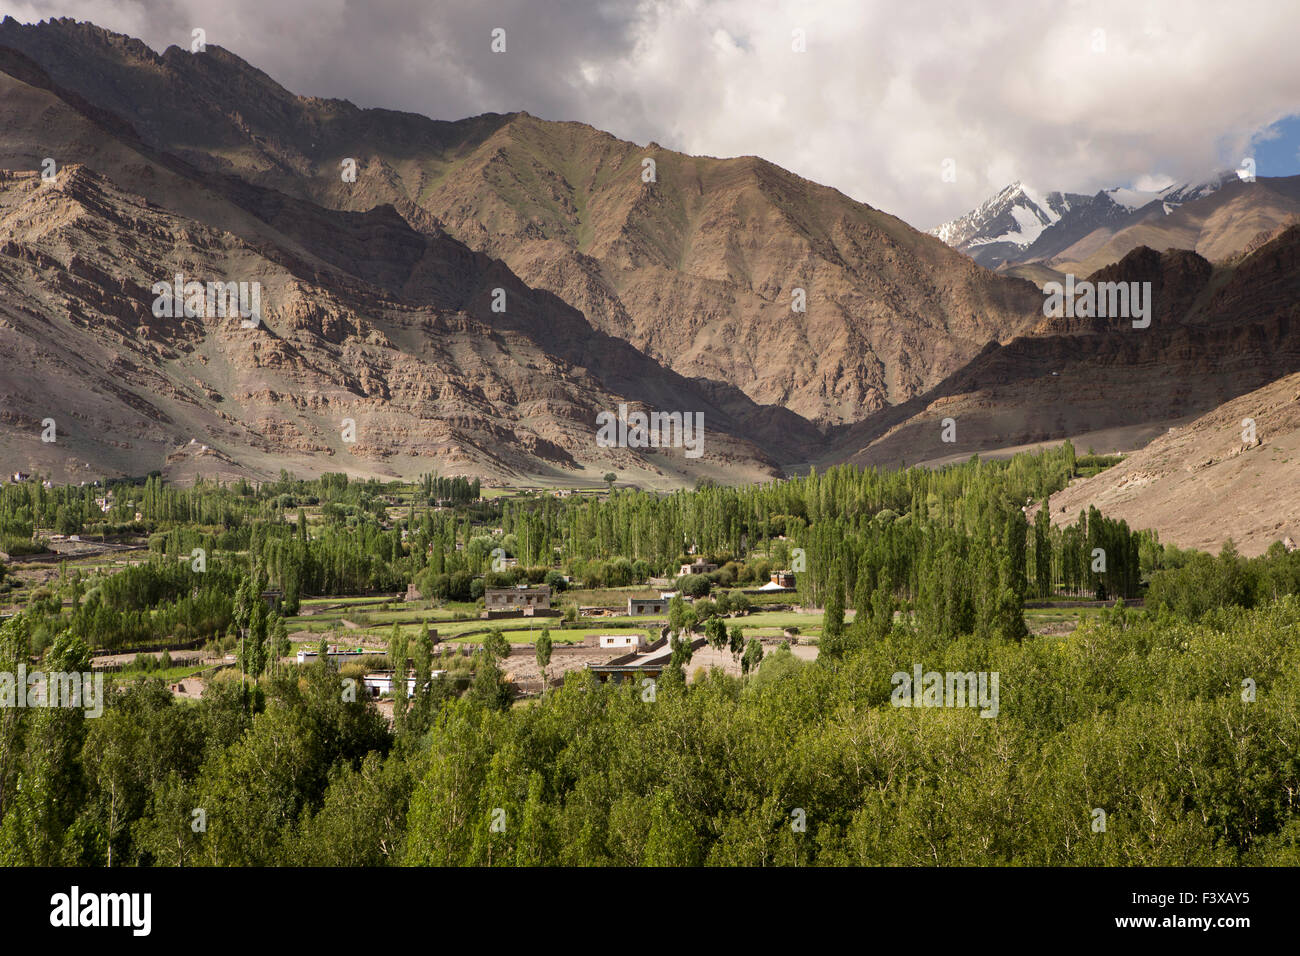 India, Jammu & Kashmir, Ladakh, Stok village amongst poplar trees, surrounded by mountains Stock Photo